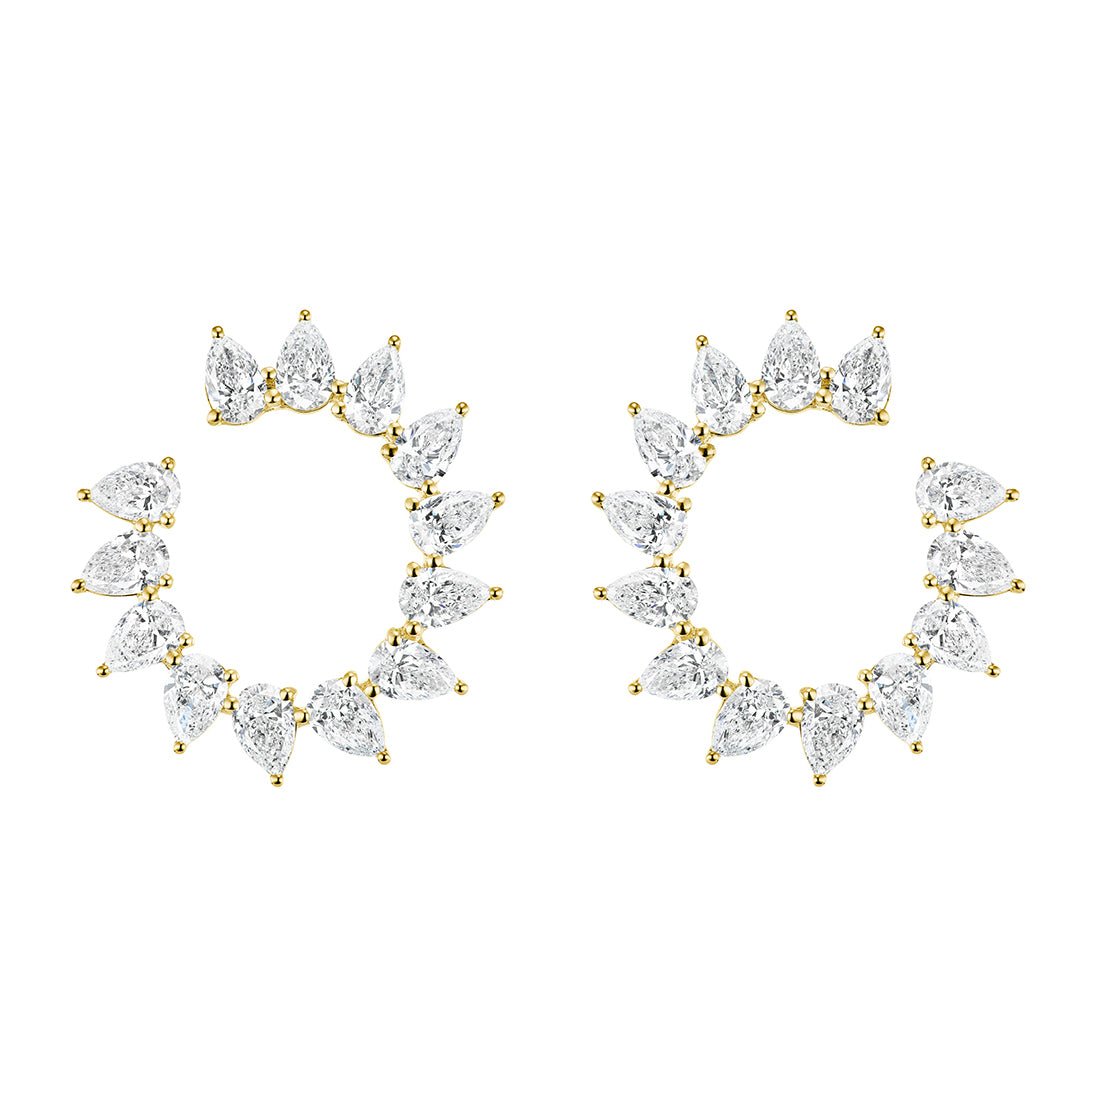 Greenleaf & Crosby - Pear-Shaped Diamond Circle Earrings